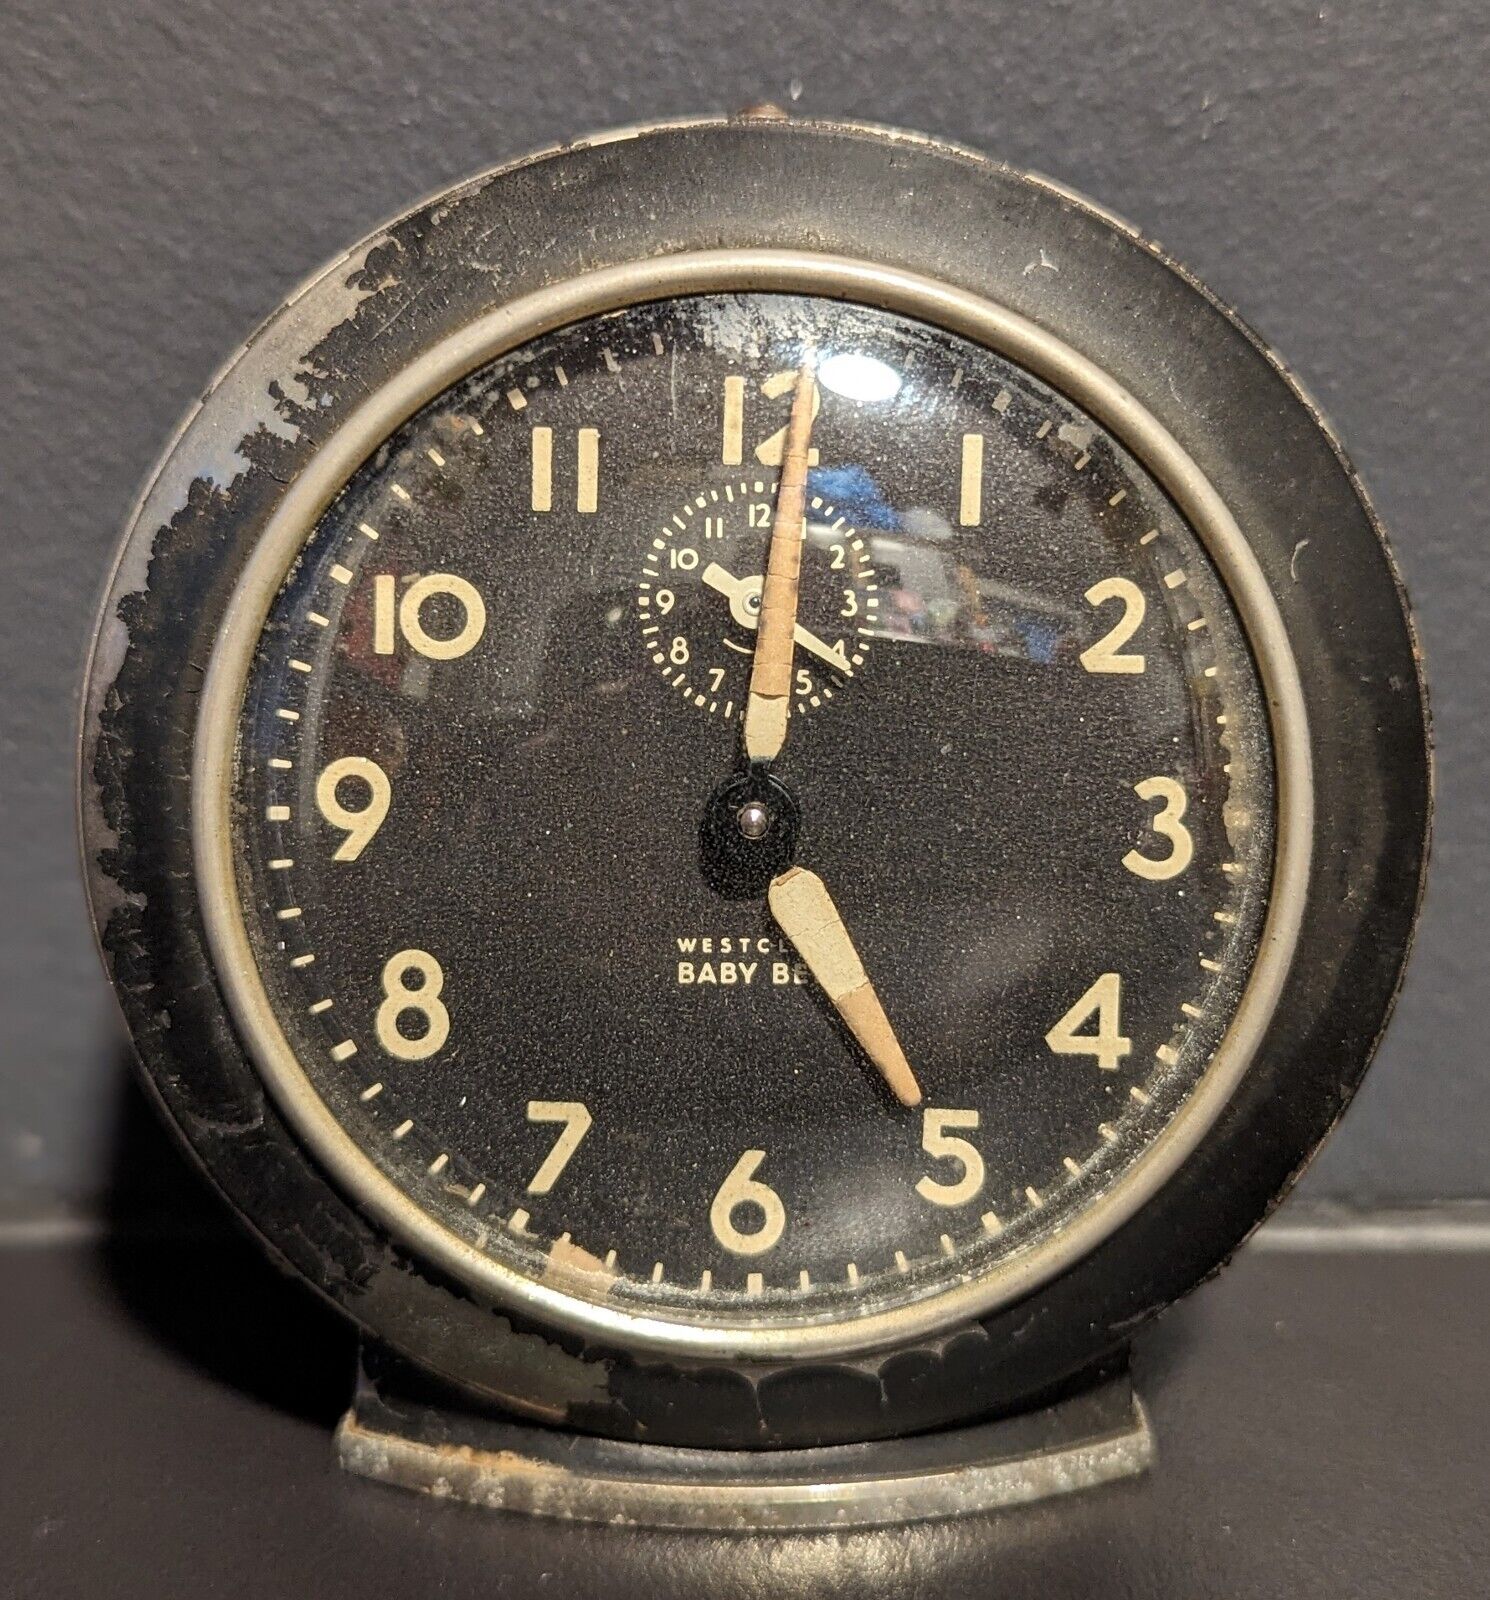 Westclox Baby Ben Windup Alarm Clock Model 61 V 1A --- Working with **FLAW**